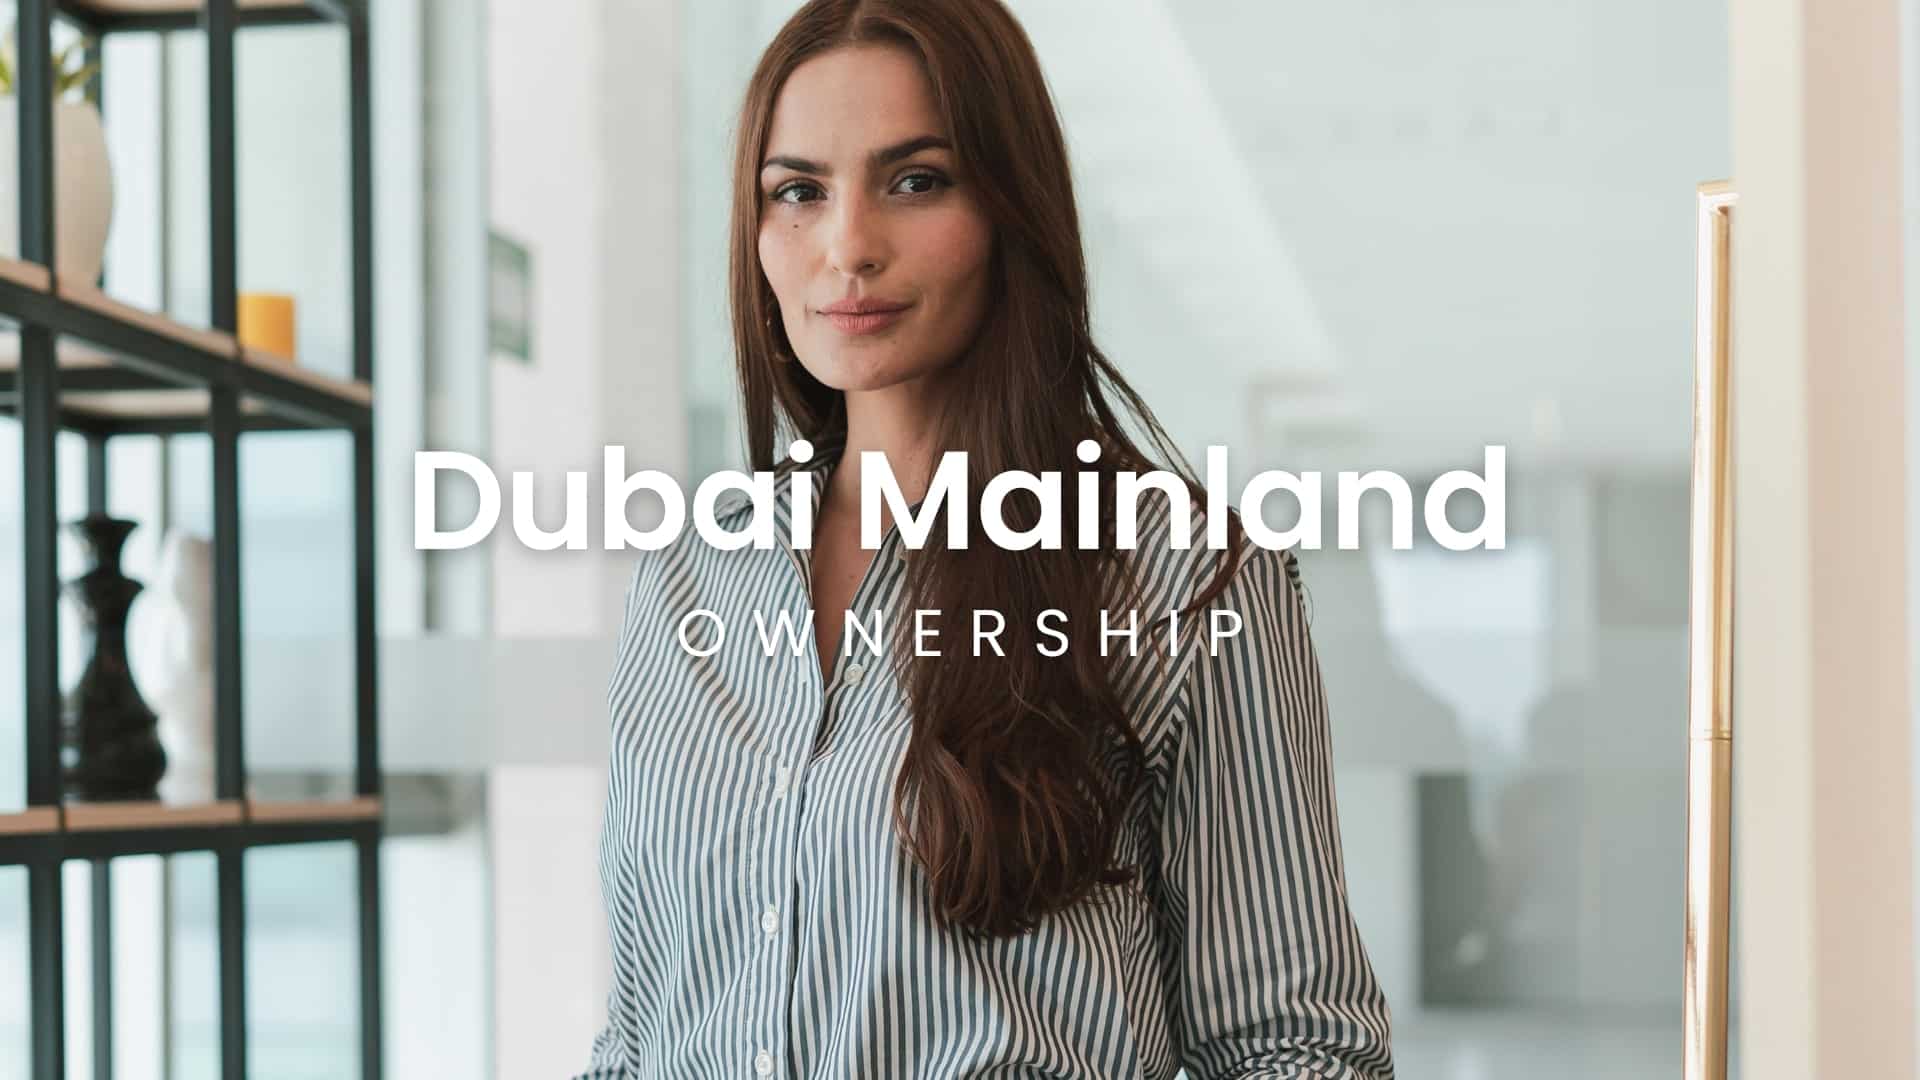 Concept of Dubai Mainland Ownership